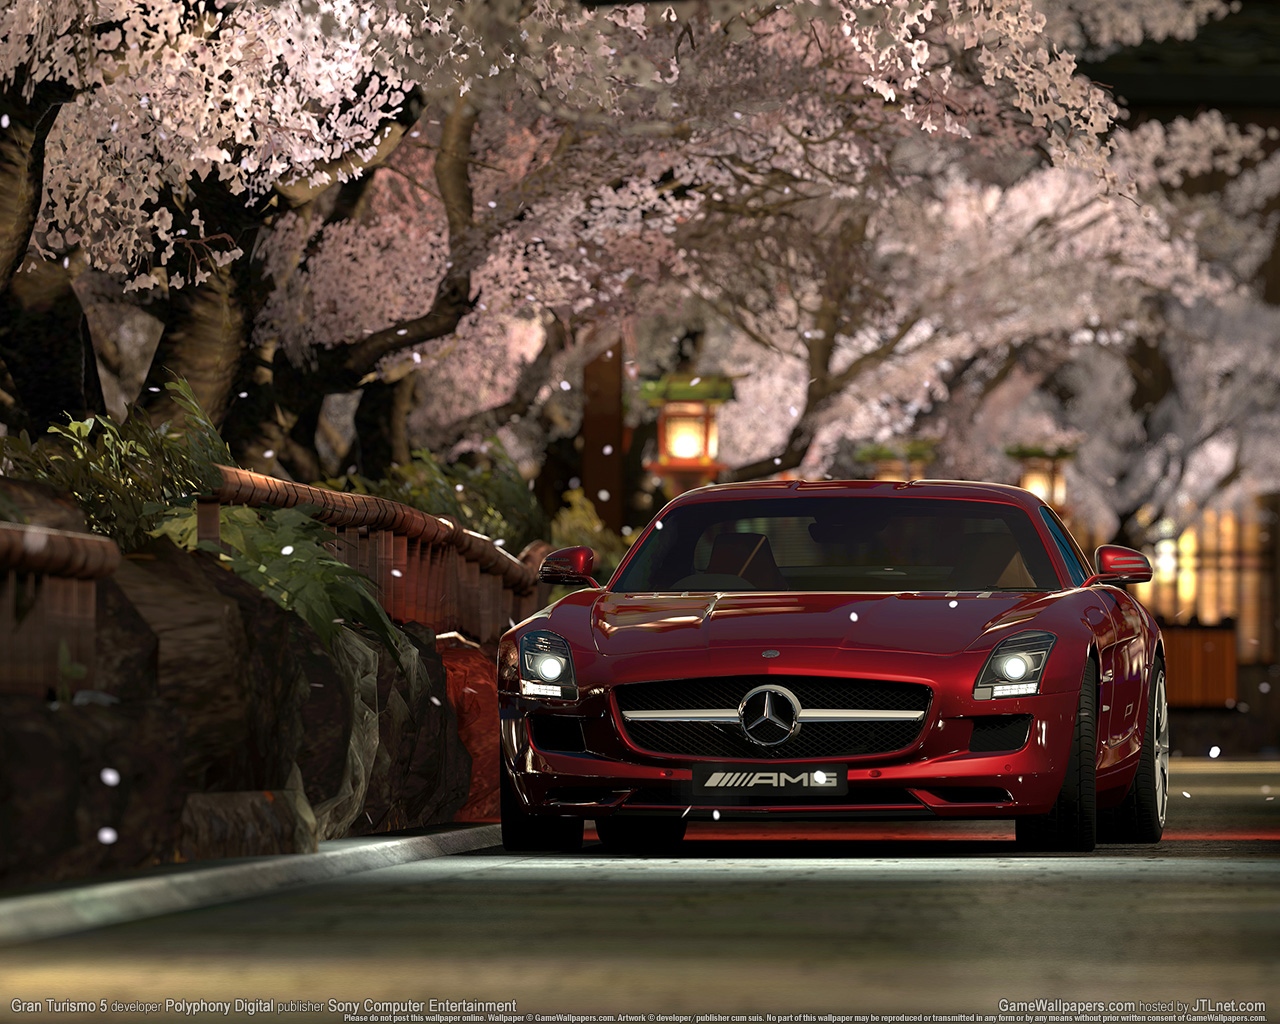 Image Gran Turismo 5 vdeo game